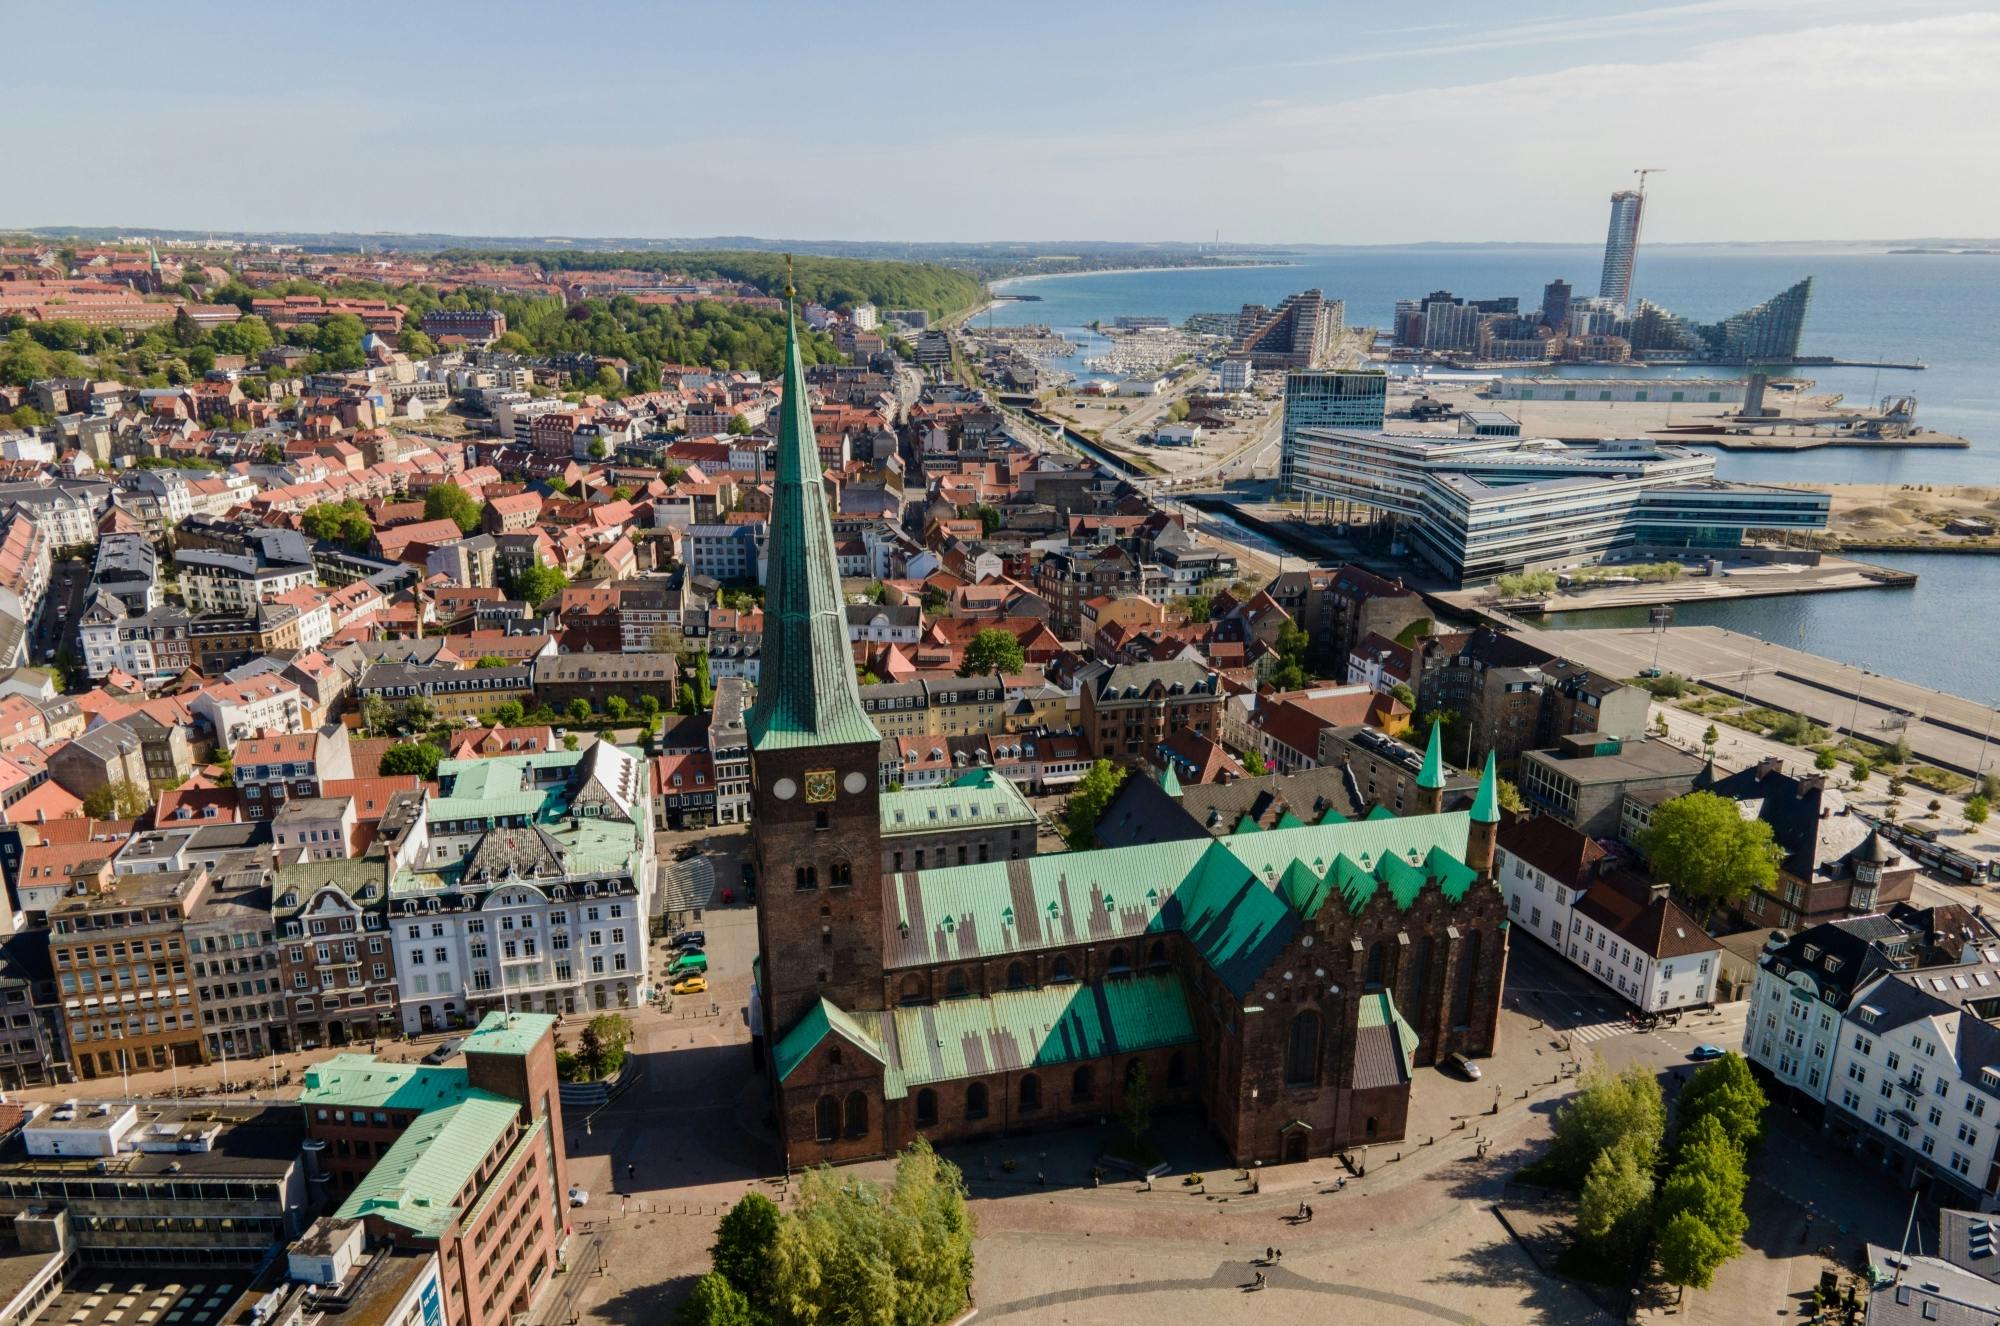 Caminhada misteriosa autoguiada: sabotagem em Aarhus